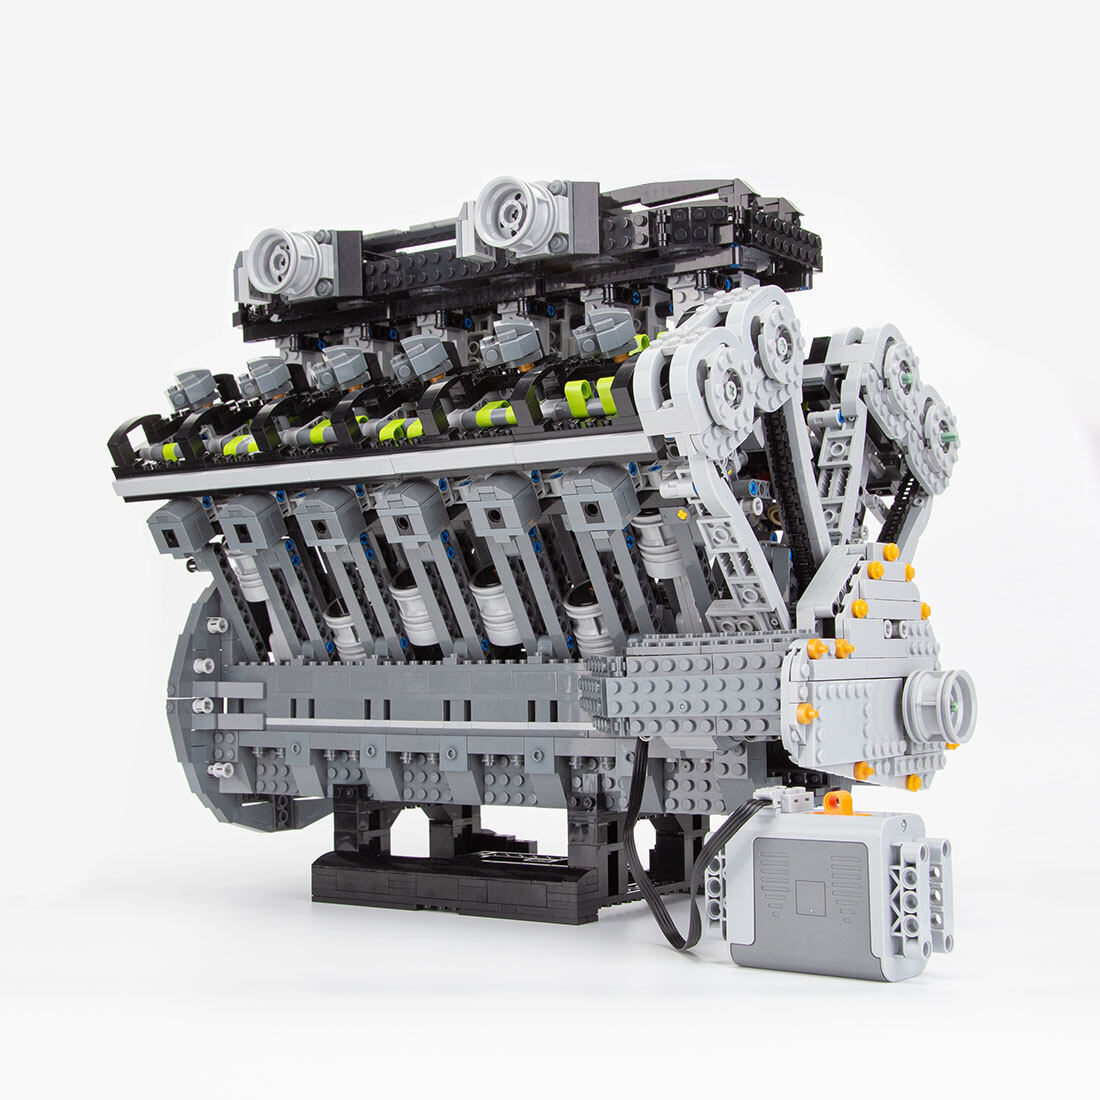 6.5L Quad Cam 60° V12 Cylinder Mid-Speed Engine Small Particle Building Blocks Set (3679PCS) enginediyshop